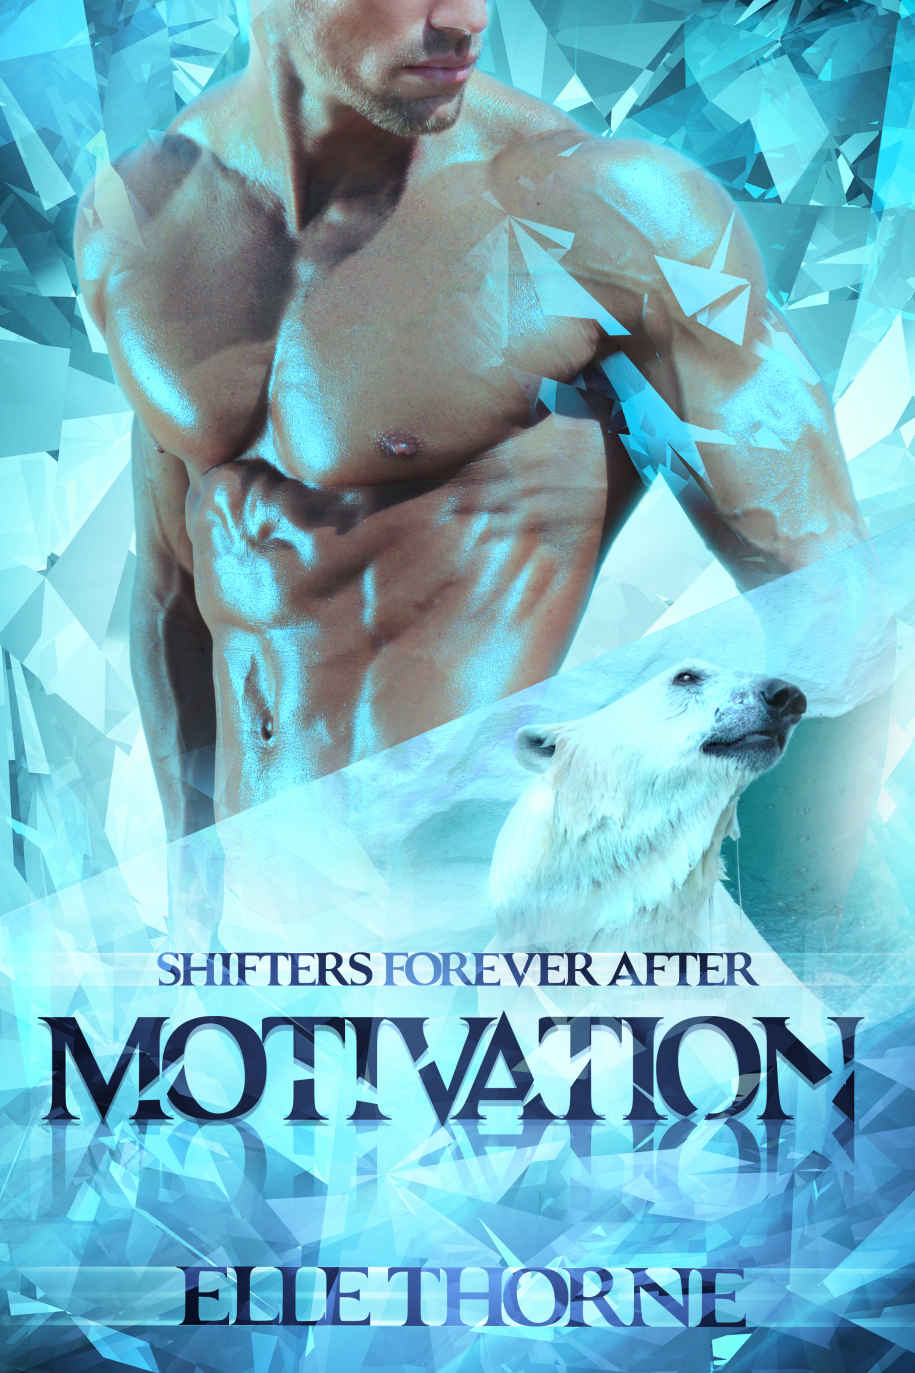 Motivation (Shifters Forever After# 3) by Elle Thorne